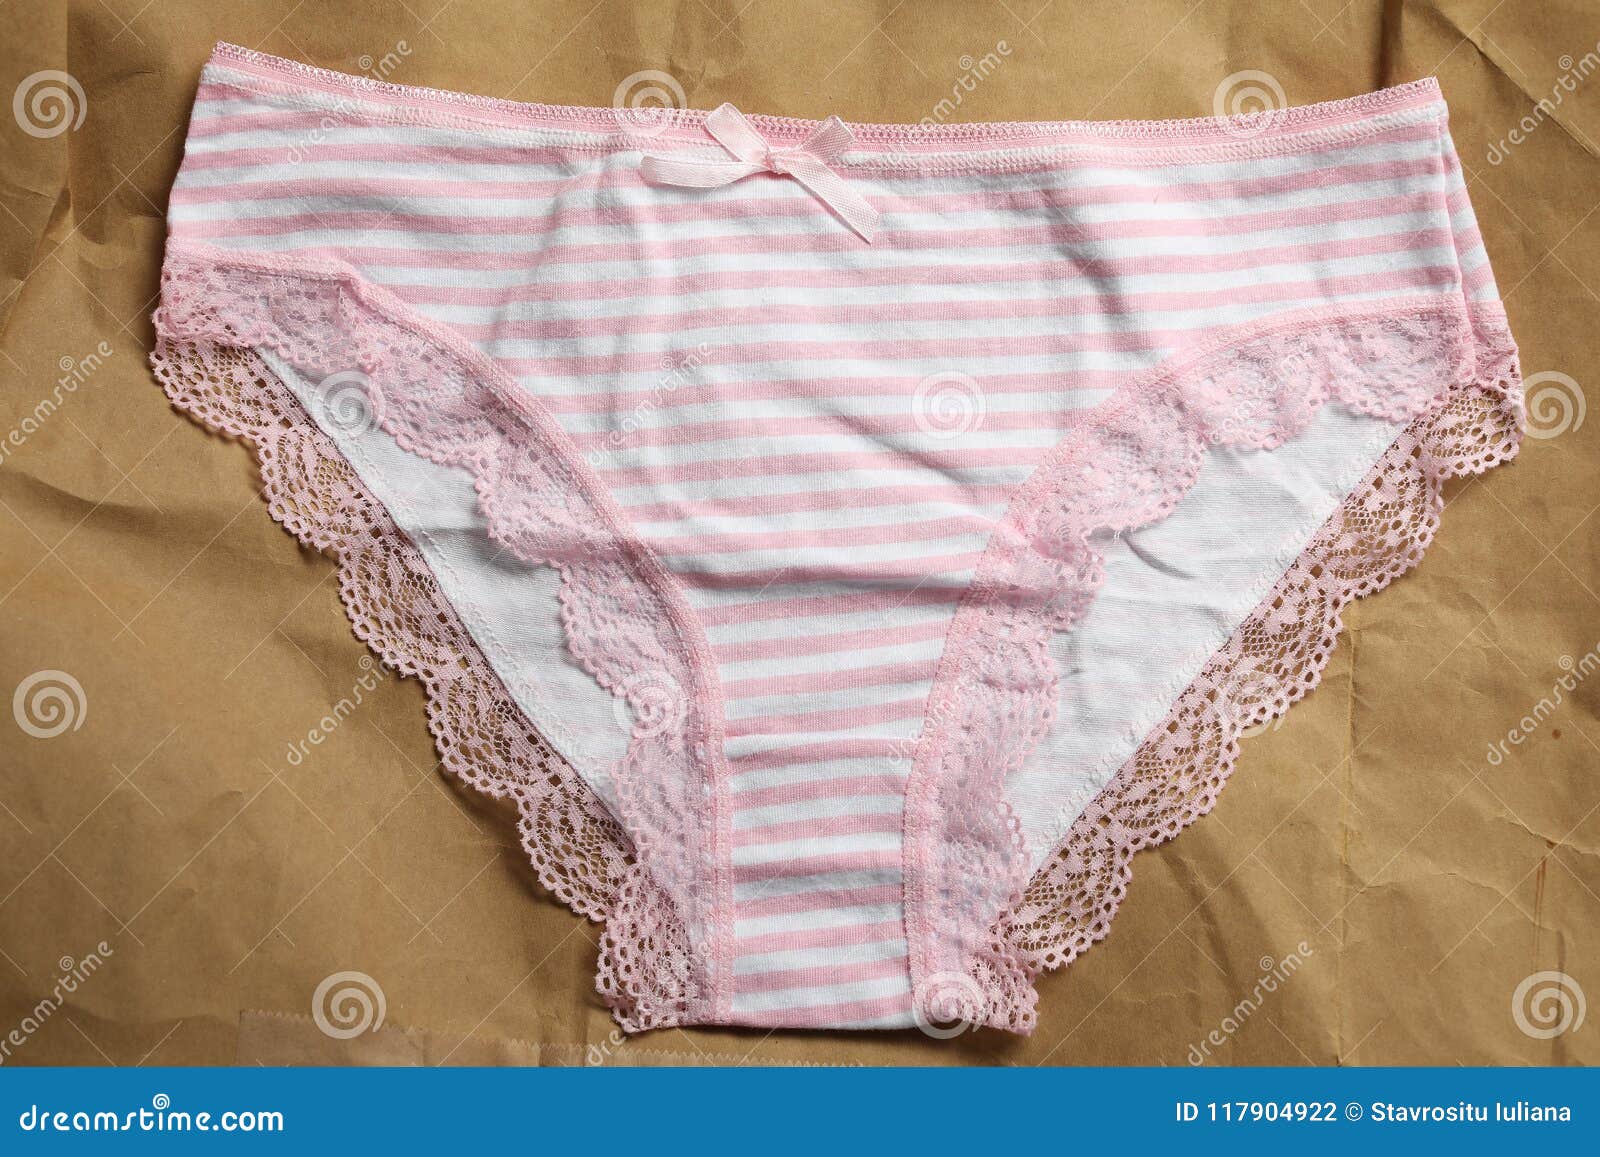 Sweet Sunday pink panties stock photo. Image of gray - 118782960